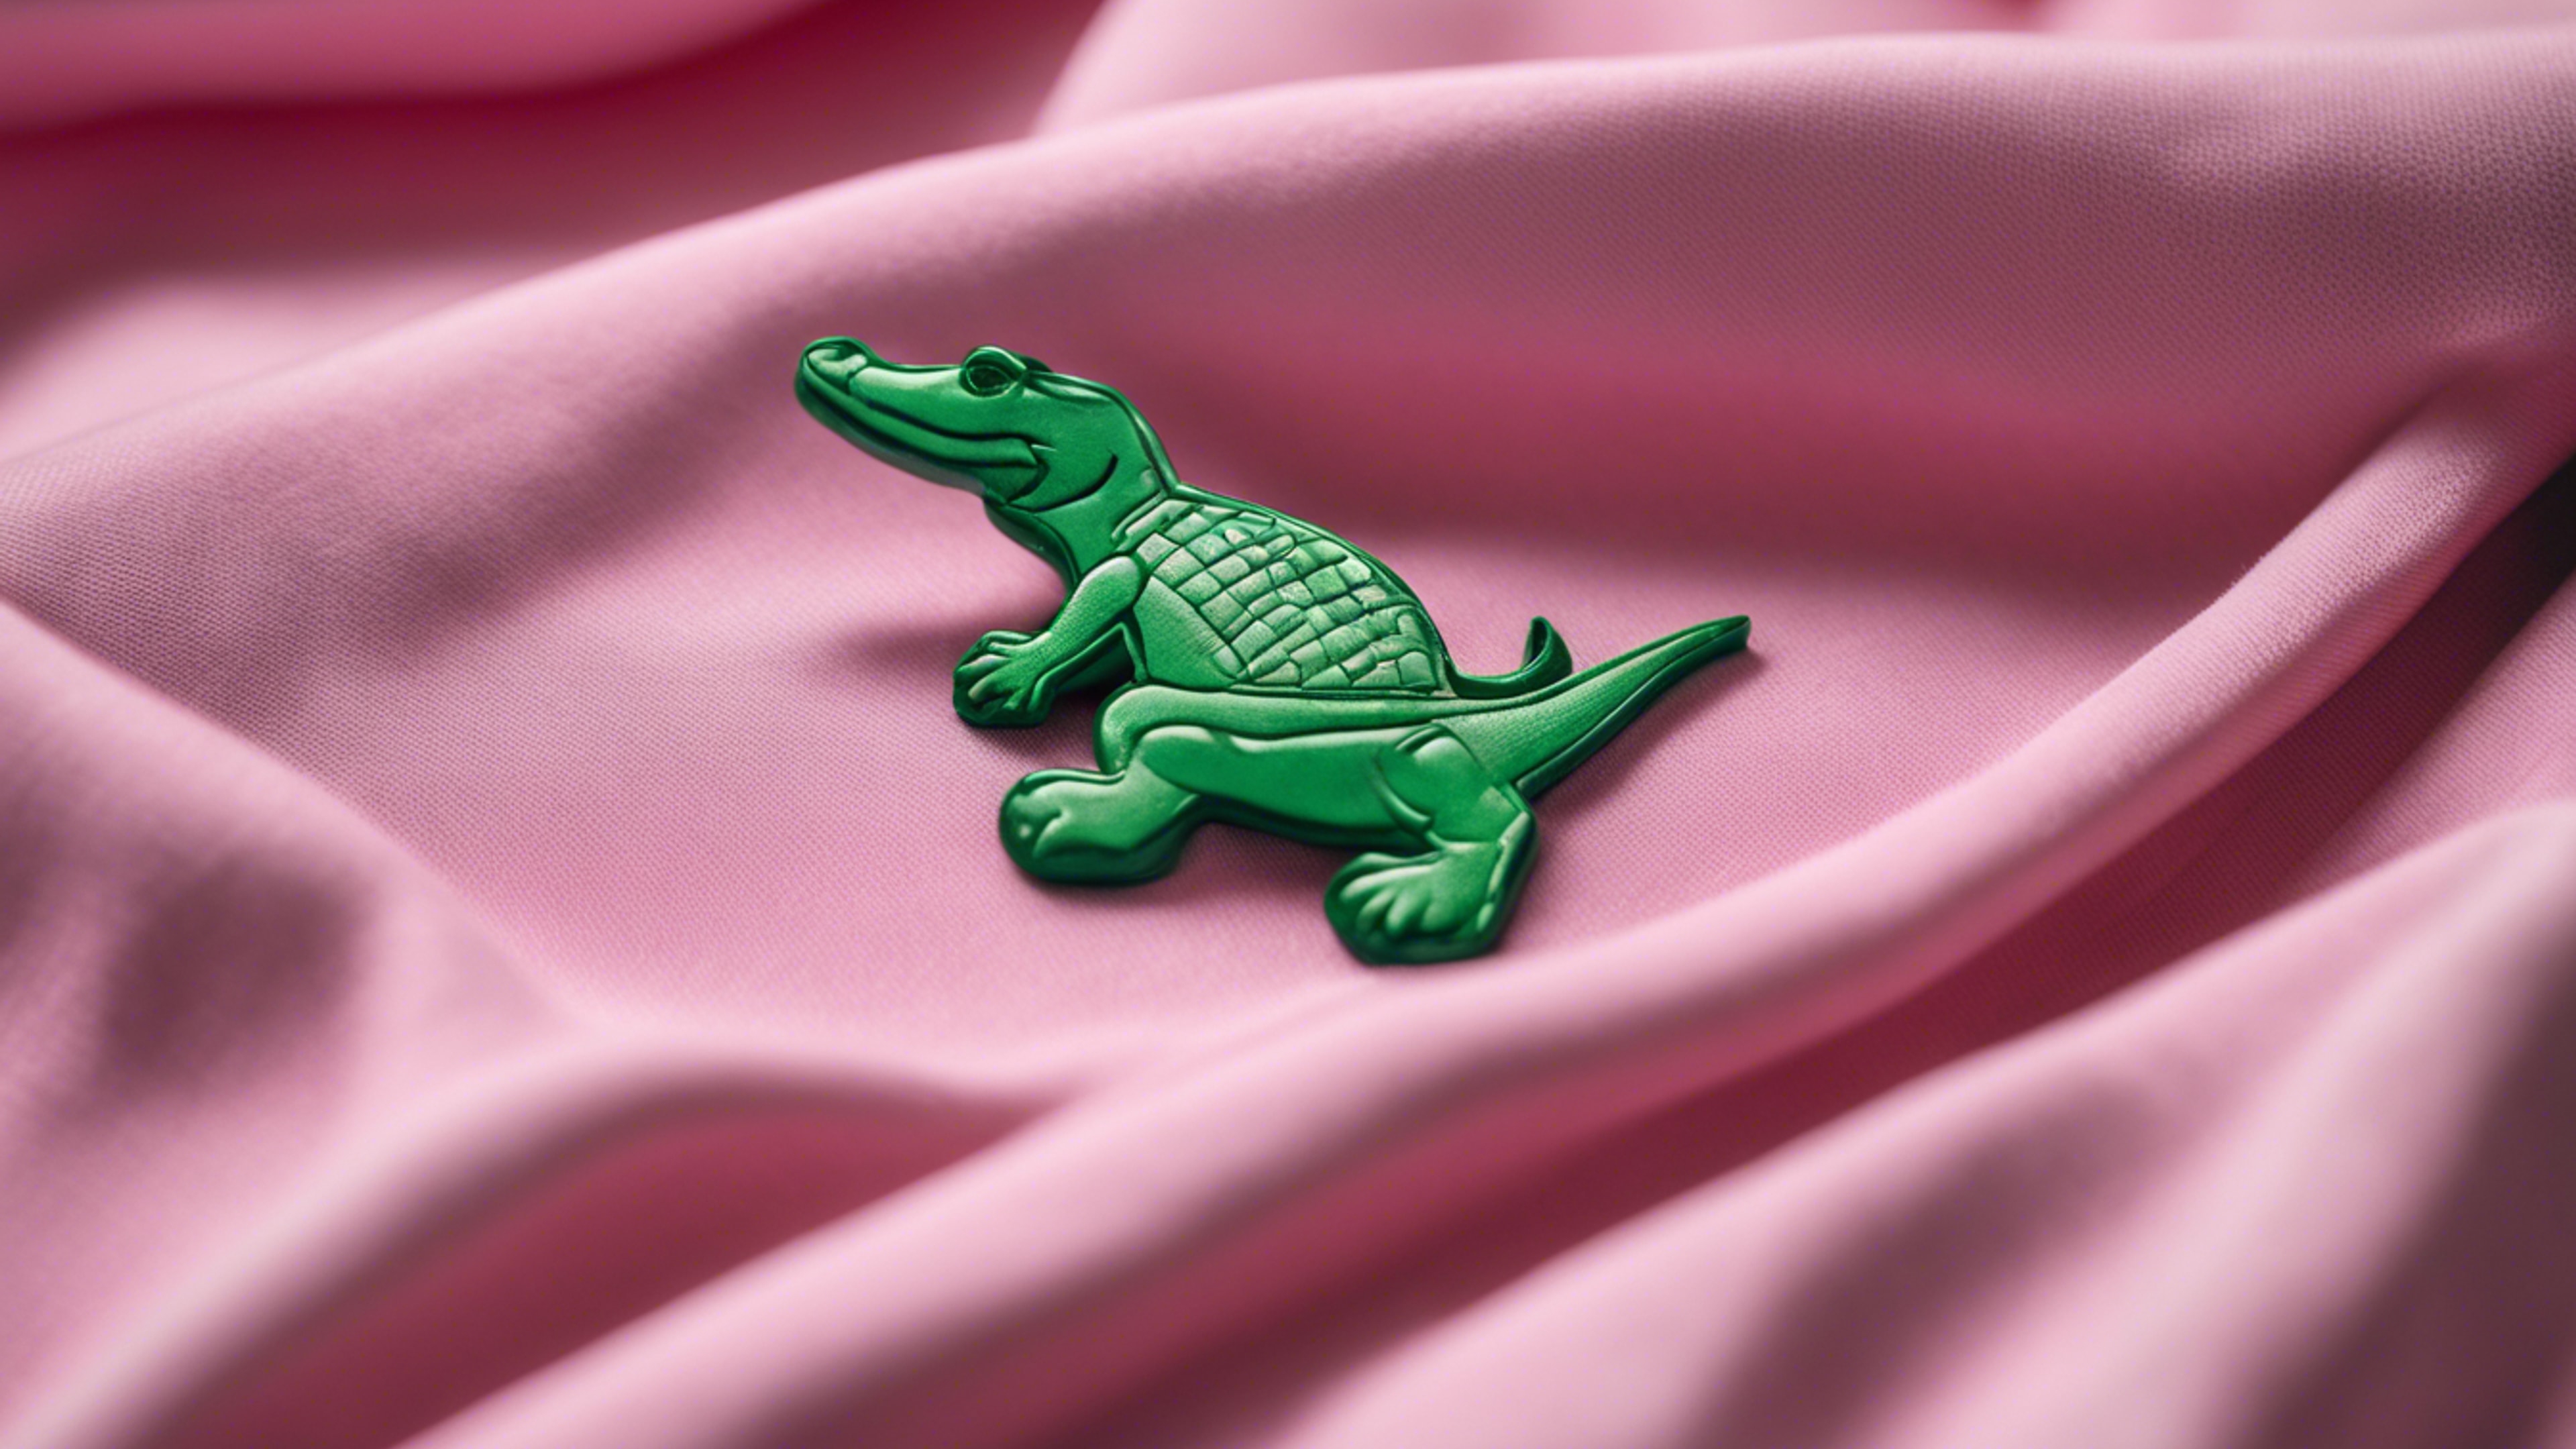 A pink polo shirt with a green alligator logo, folded neatly on a bed. ផ្ទាំង​រូបភាព[63d9ff960abf421e89a8]